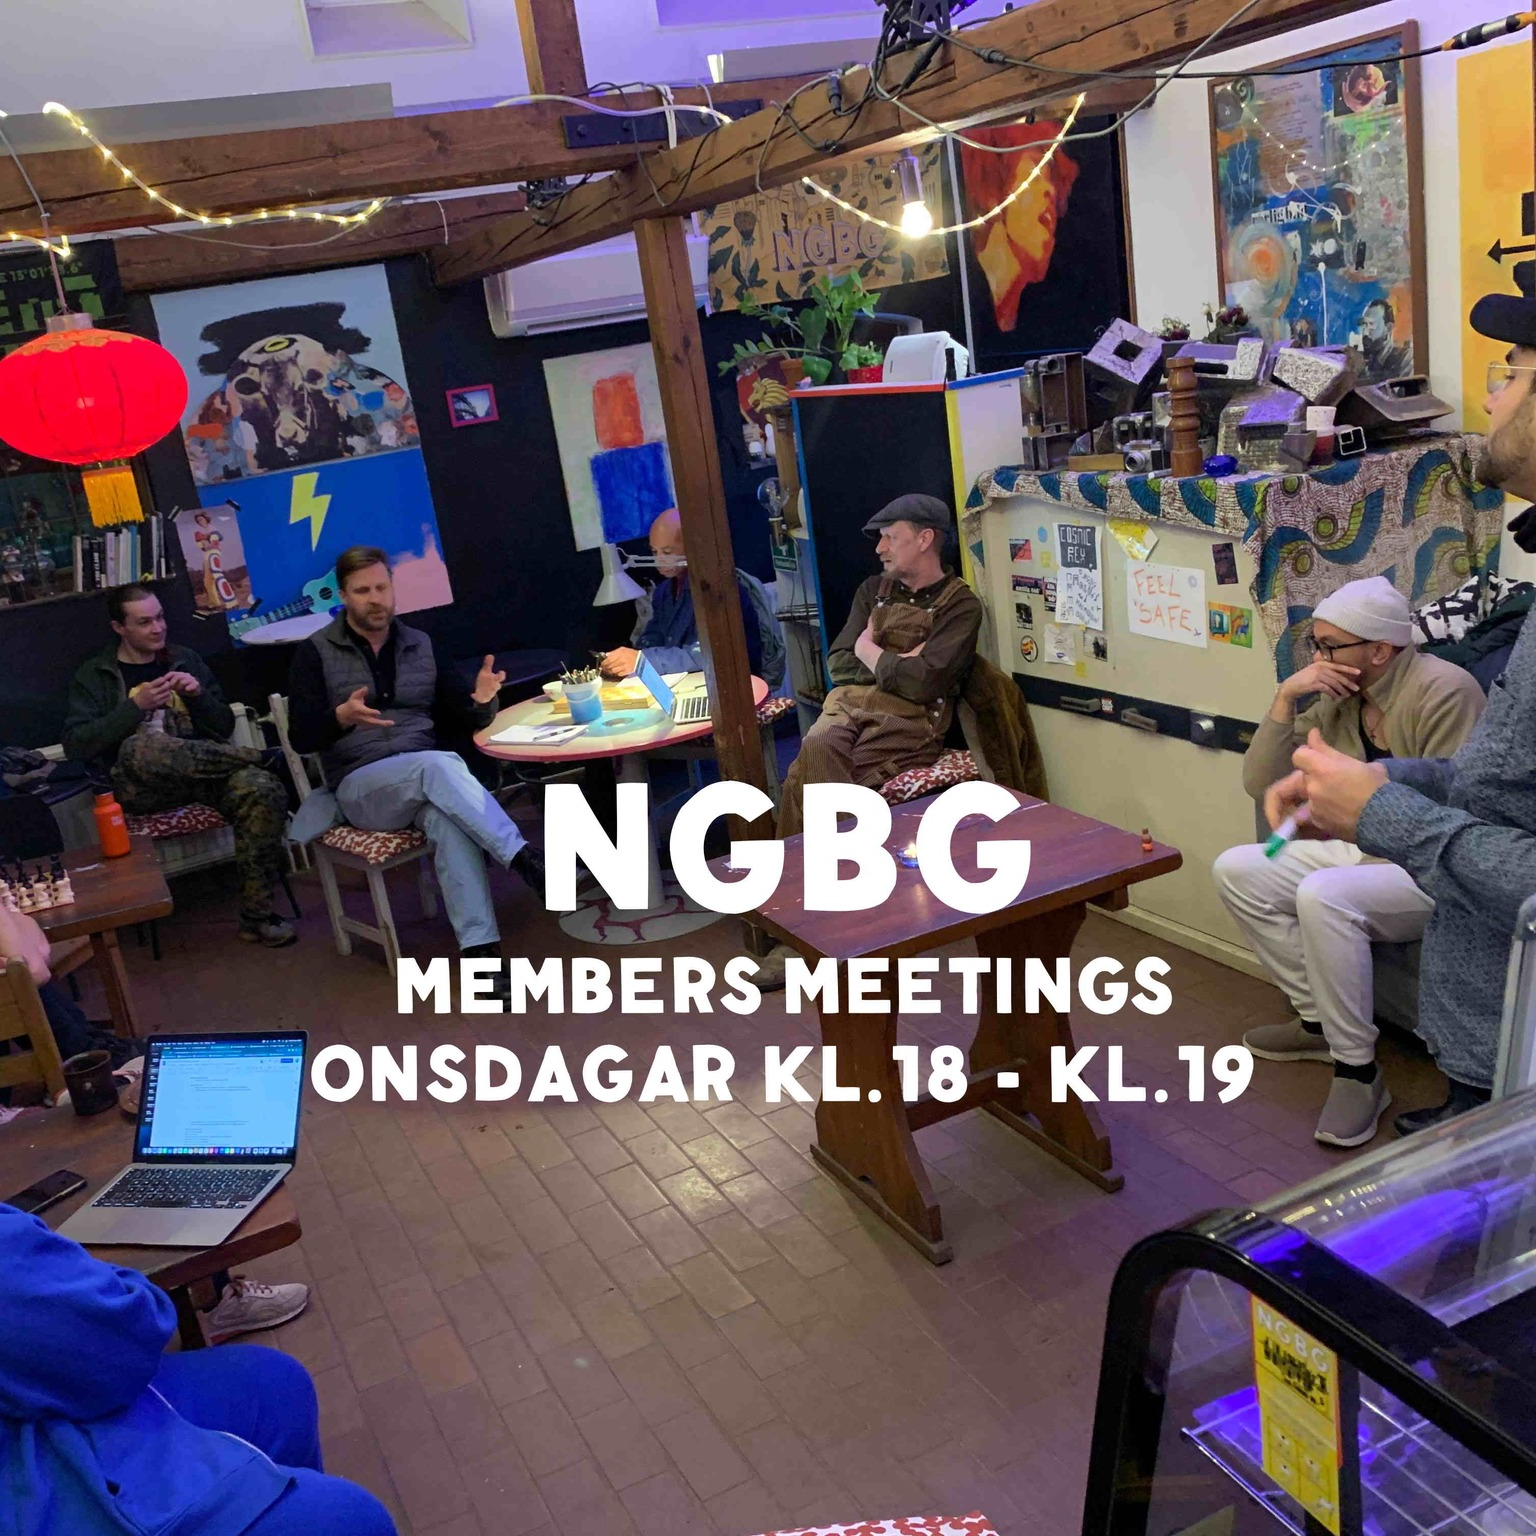 NGBG members meeting wednesdays at kopparbergsgatan